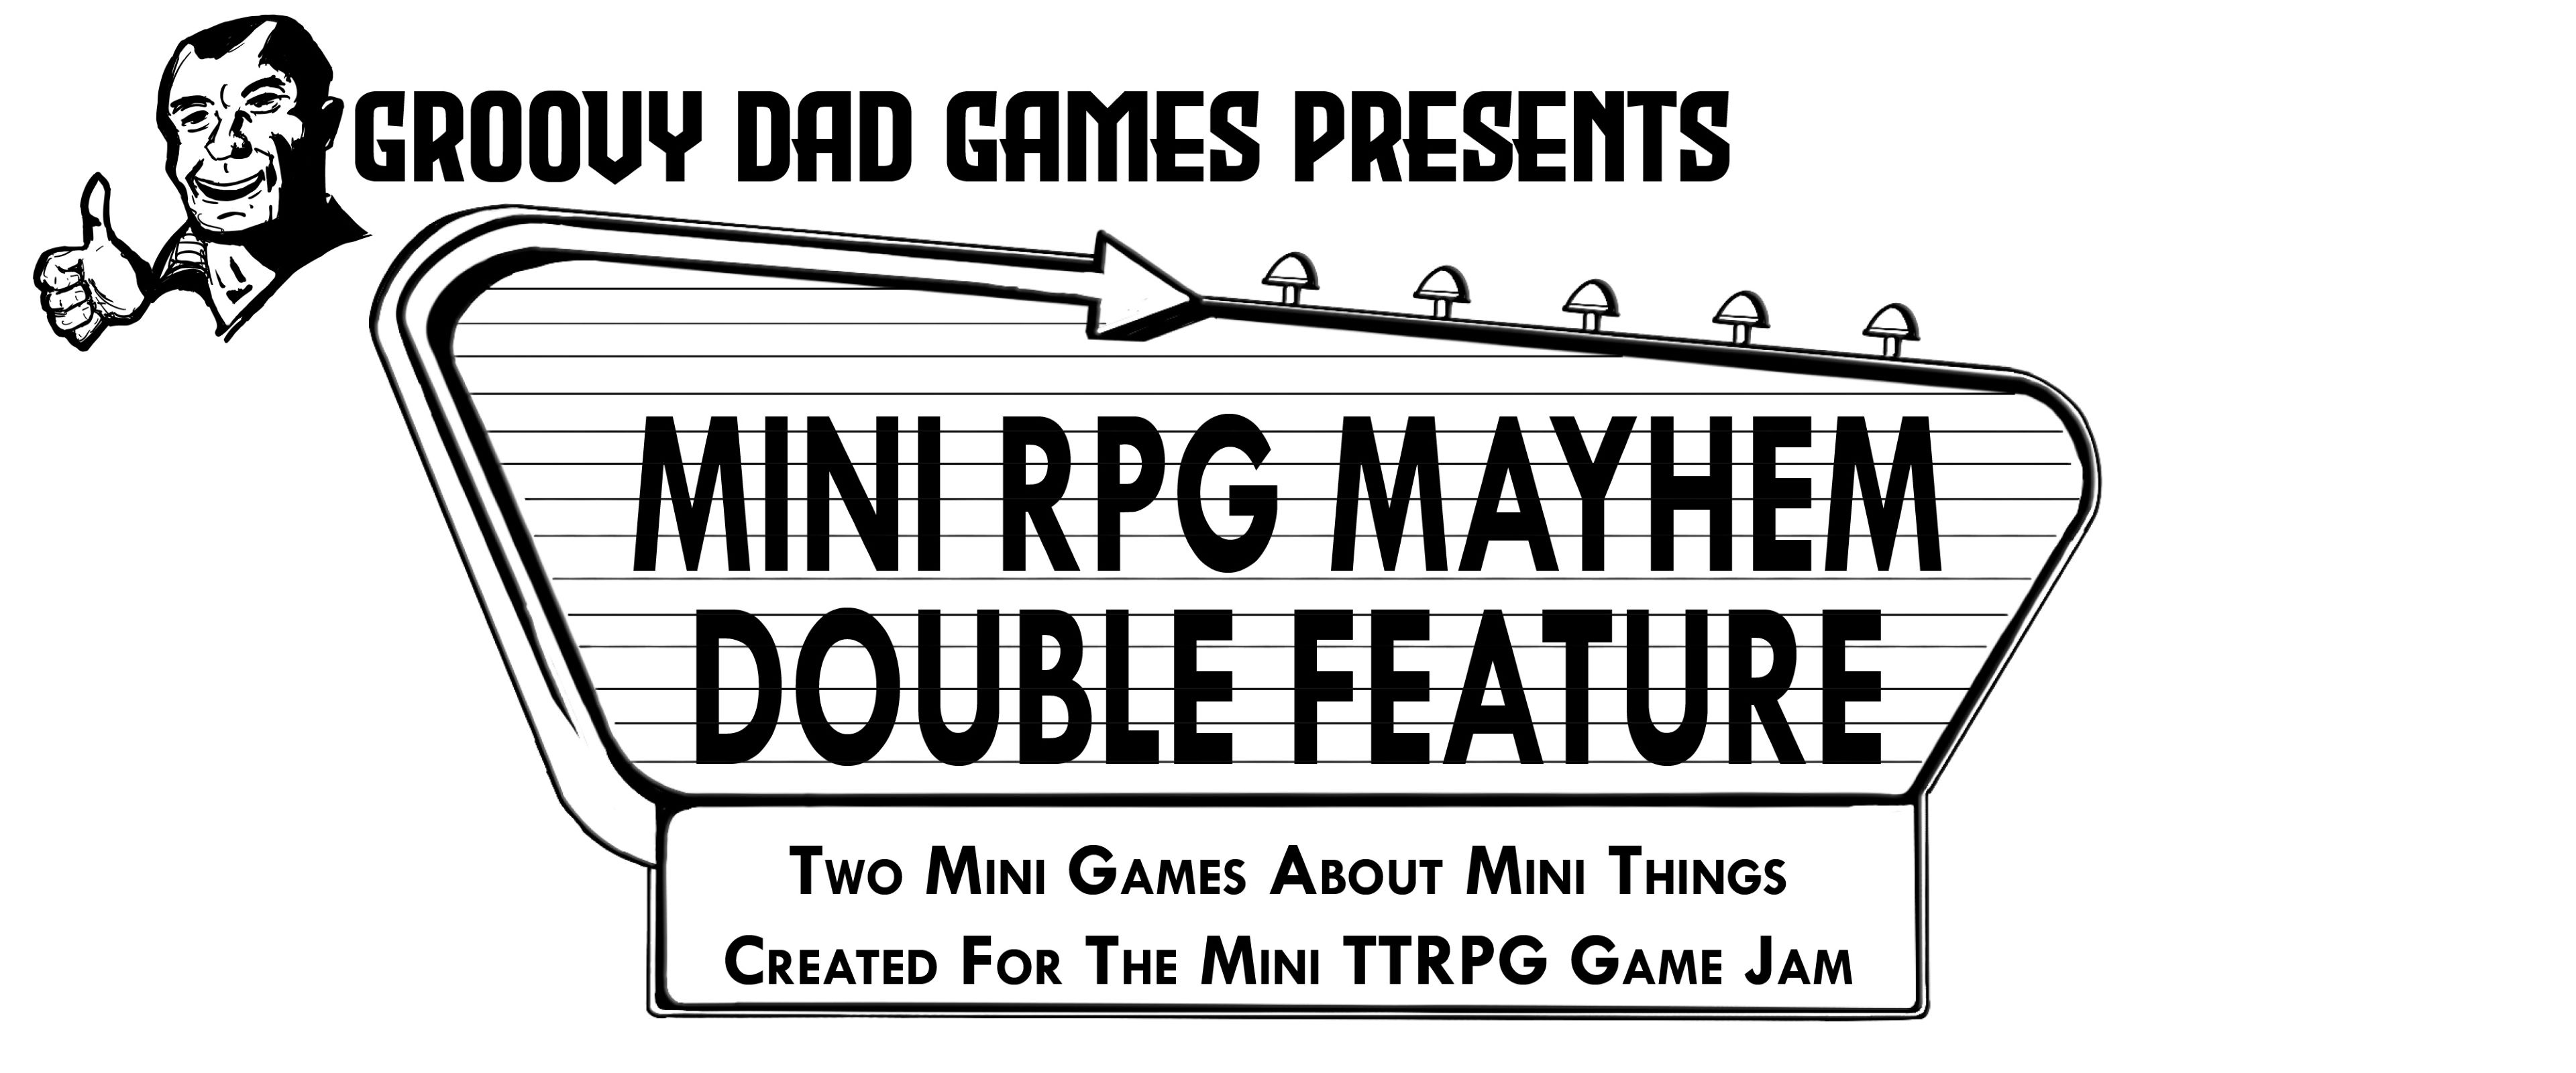 Mini RPG Mayhem Double Feature